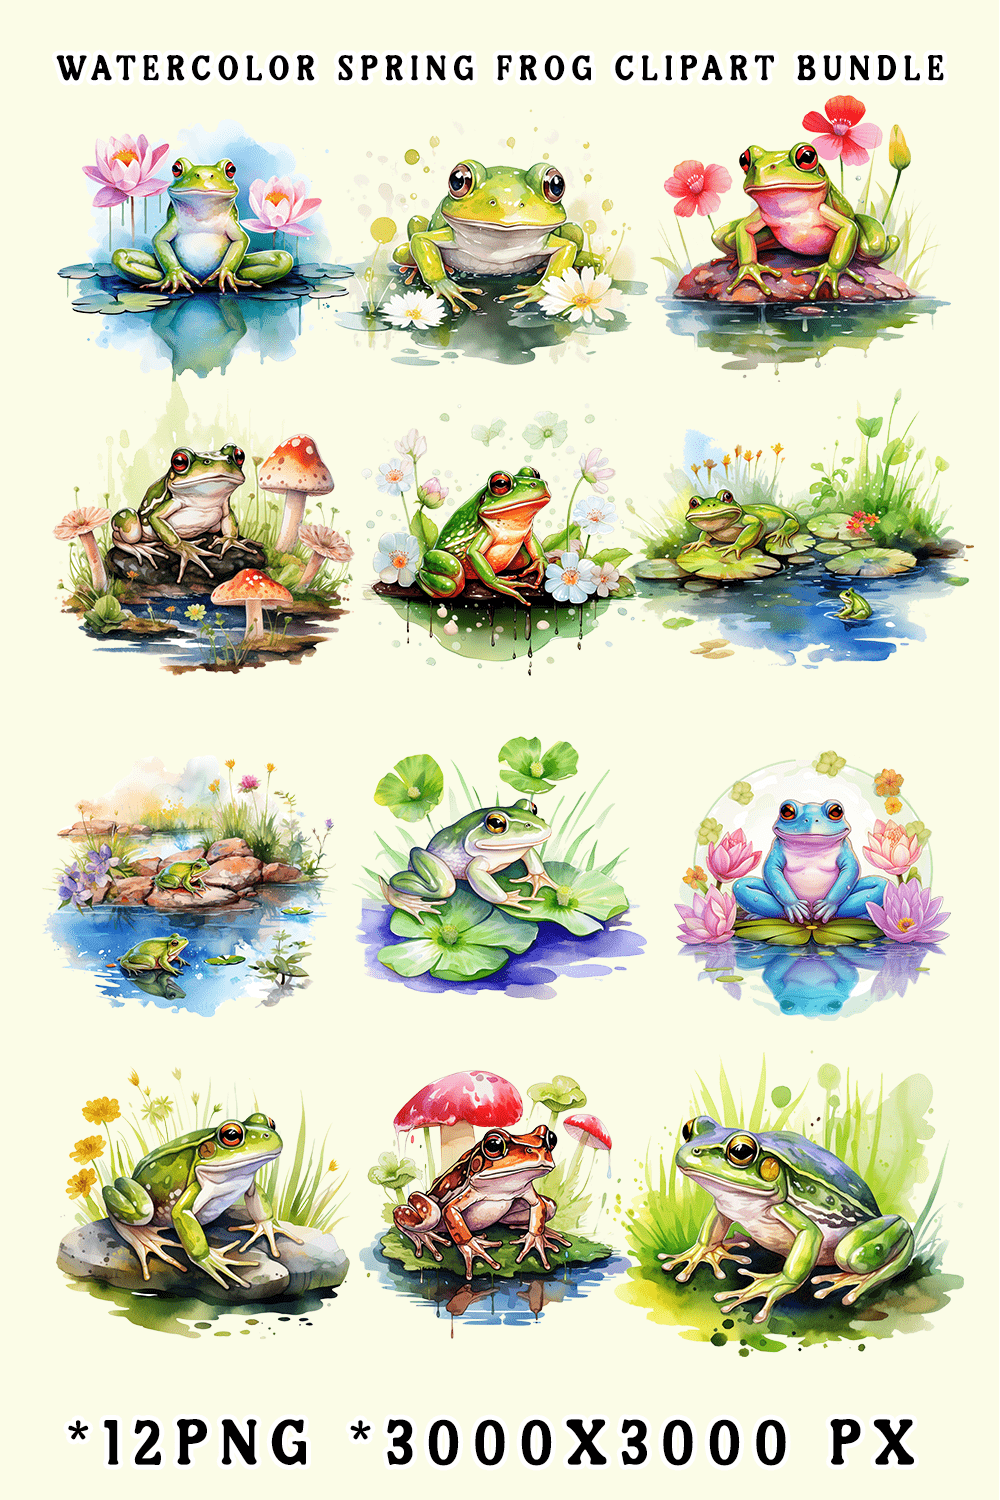 Watercolor Spring Frog Clipart Bundle pinterest preview image.